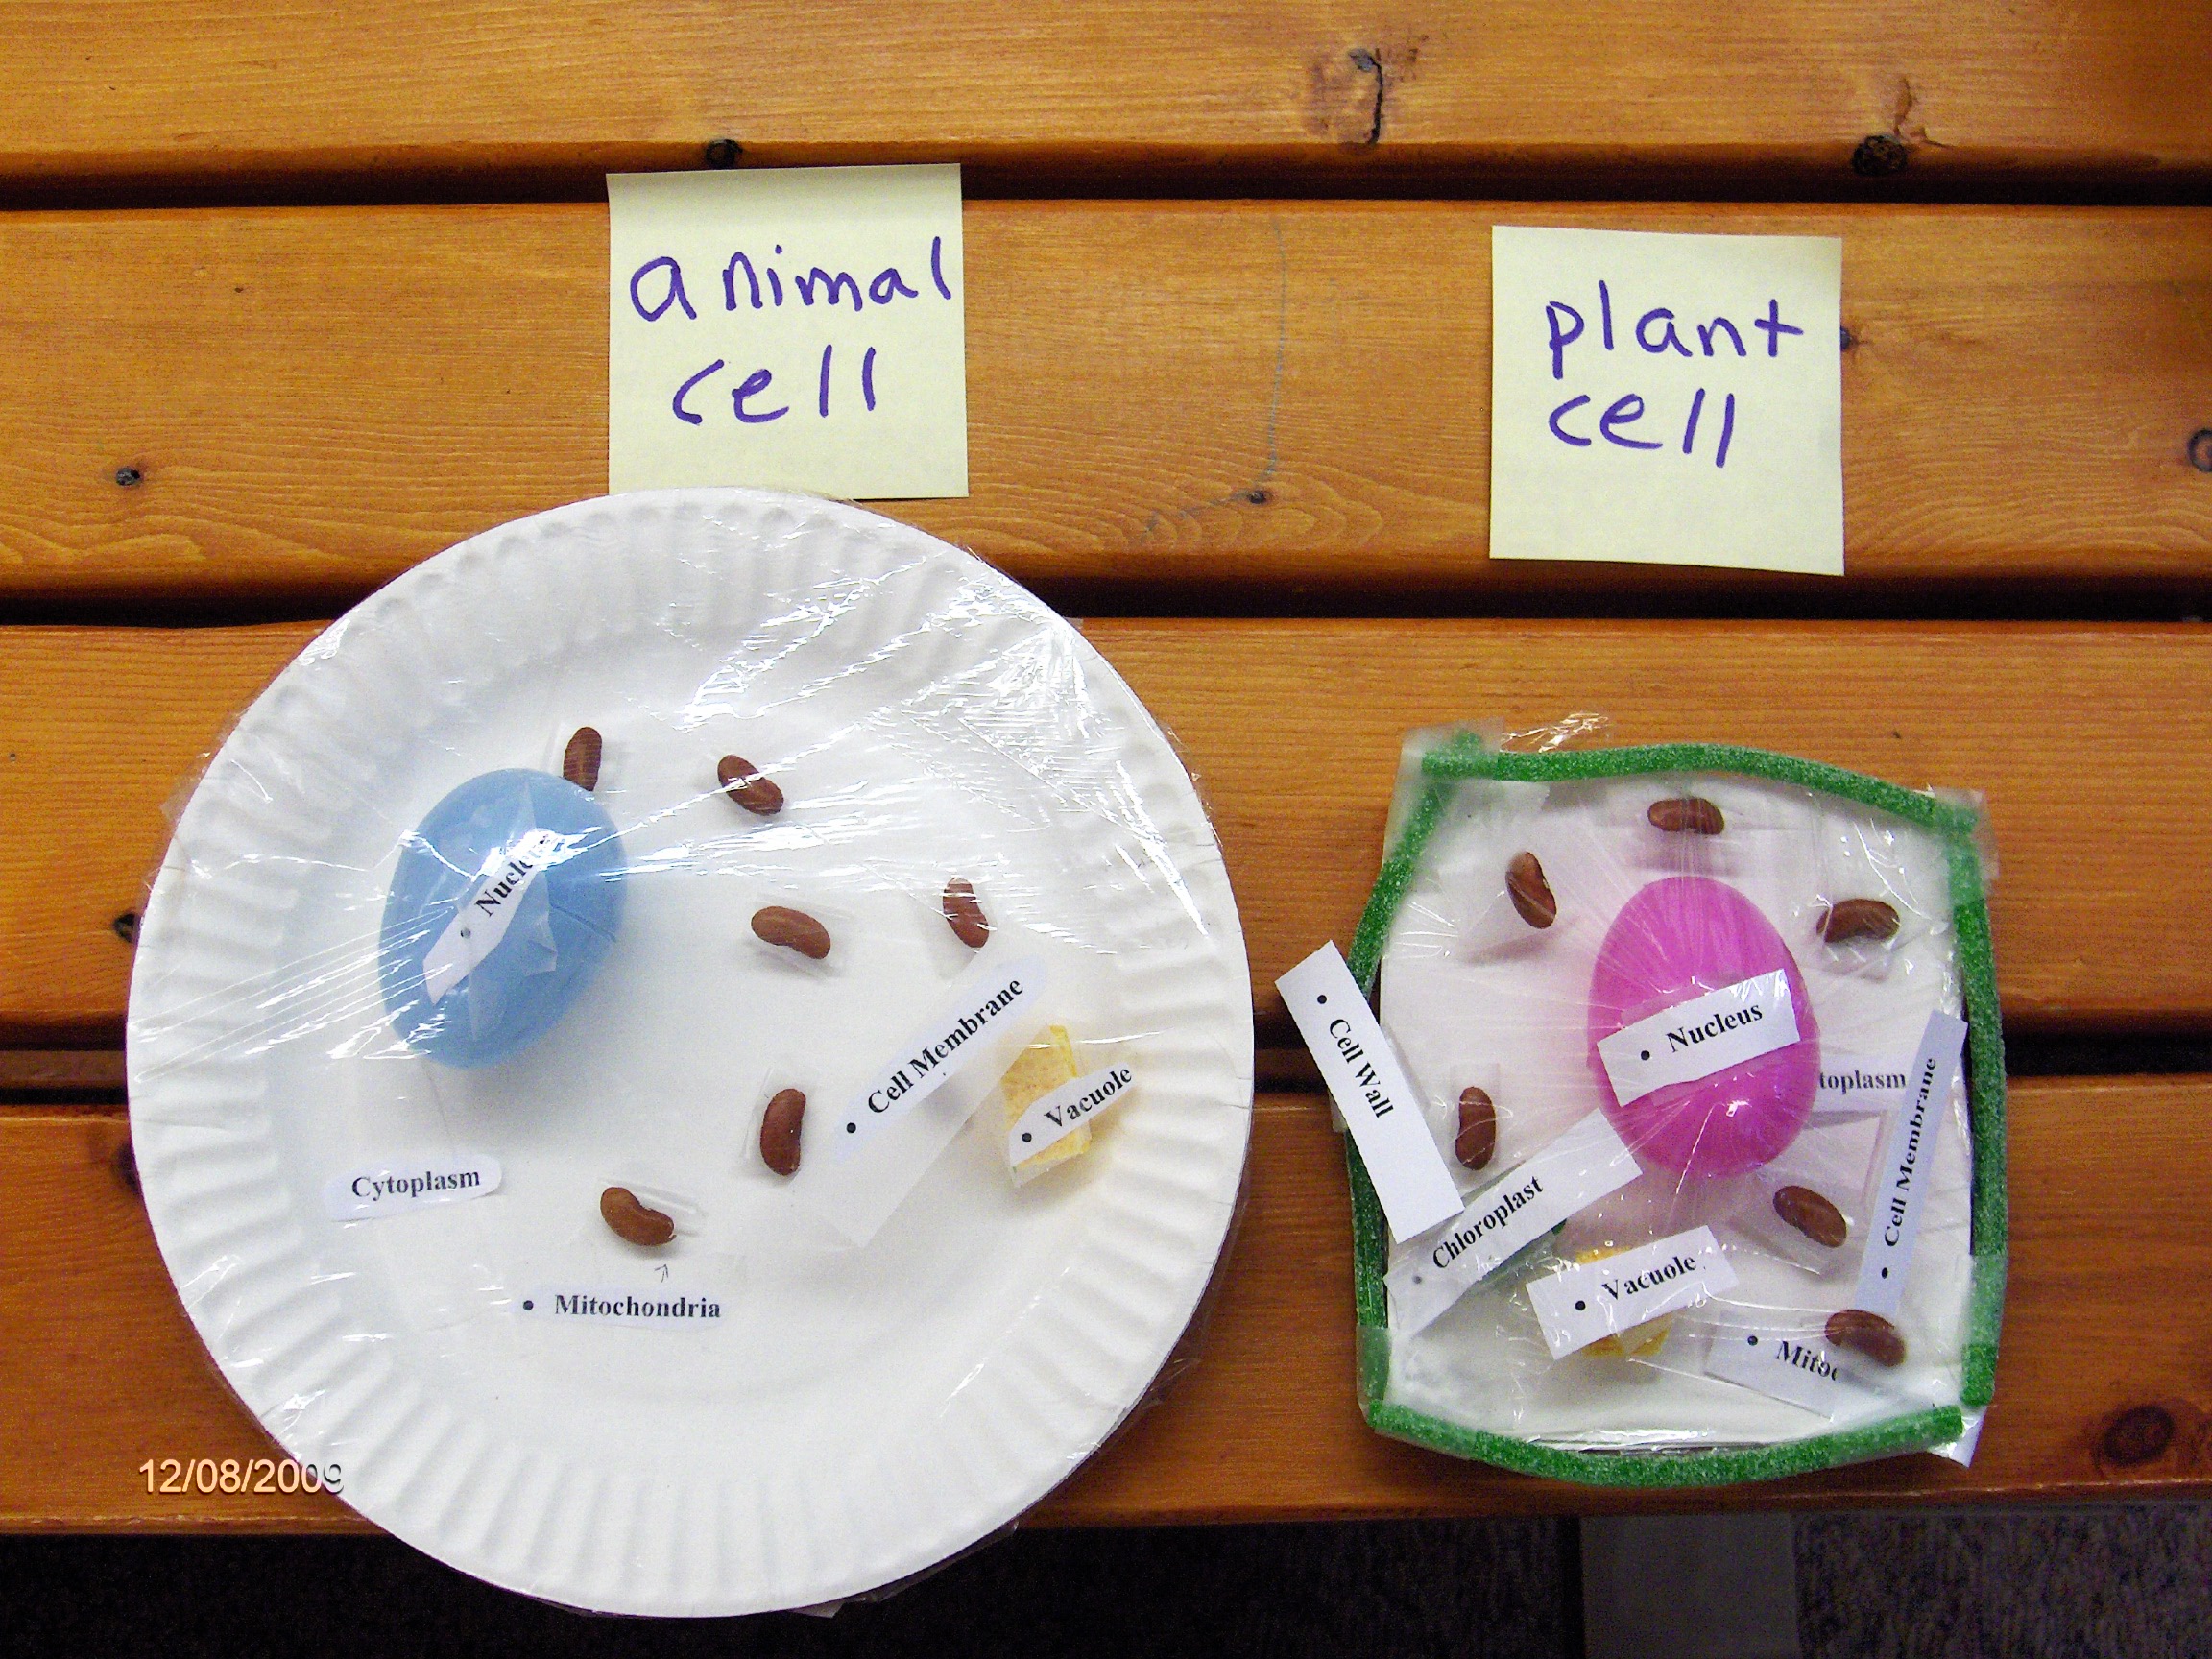 Plants And Animals Cells Comparison